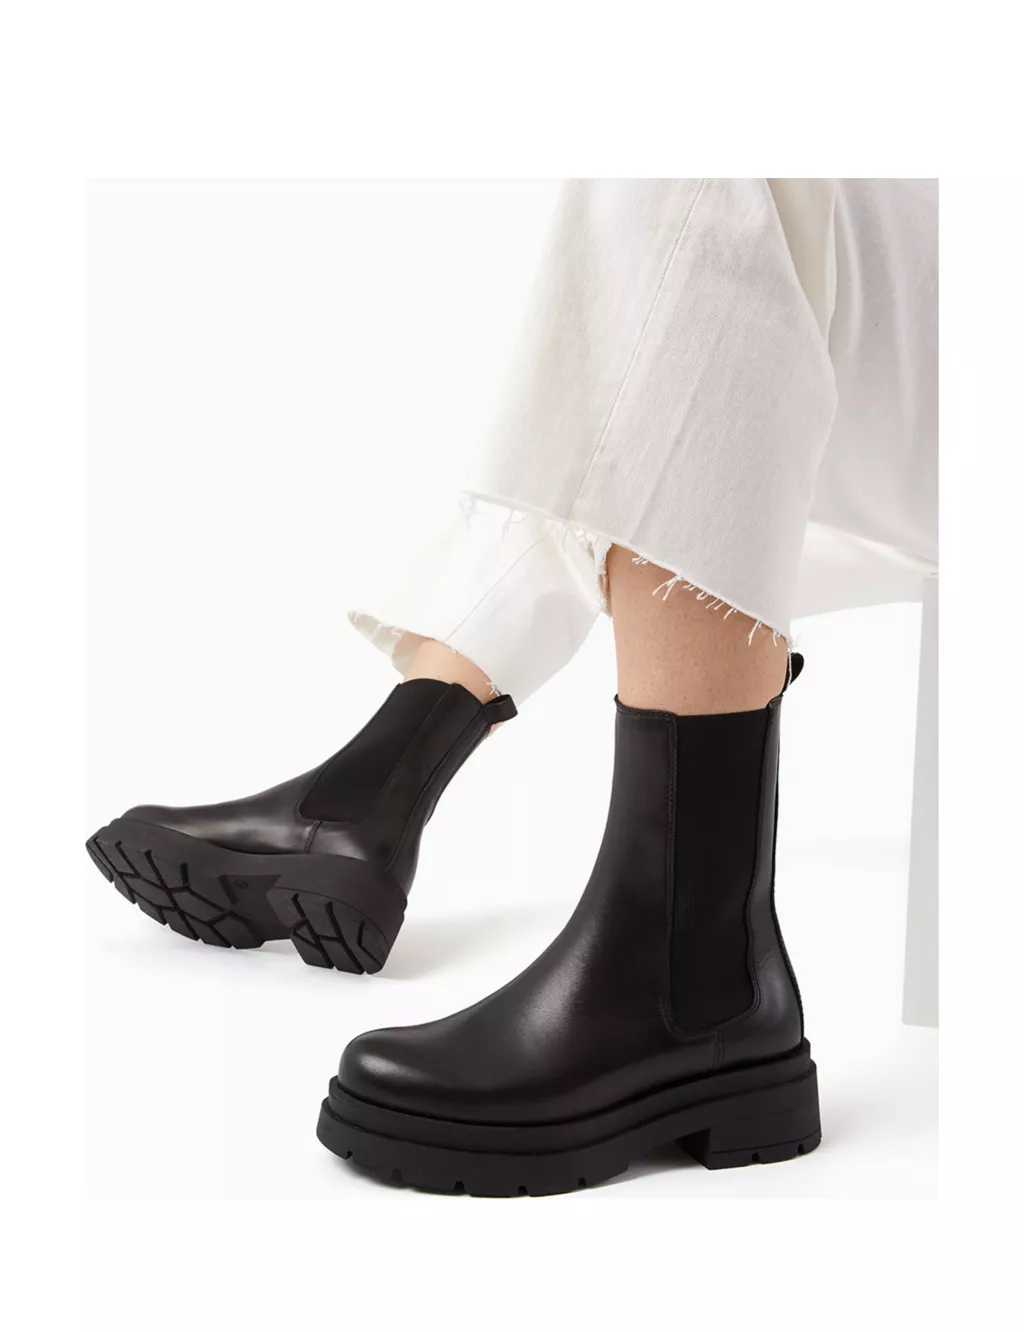 Chelsea Flatform Ankle Boots | Dune London | M&S